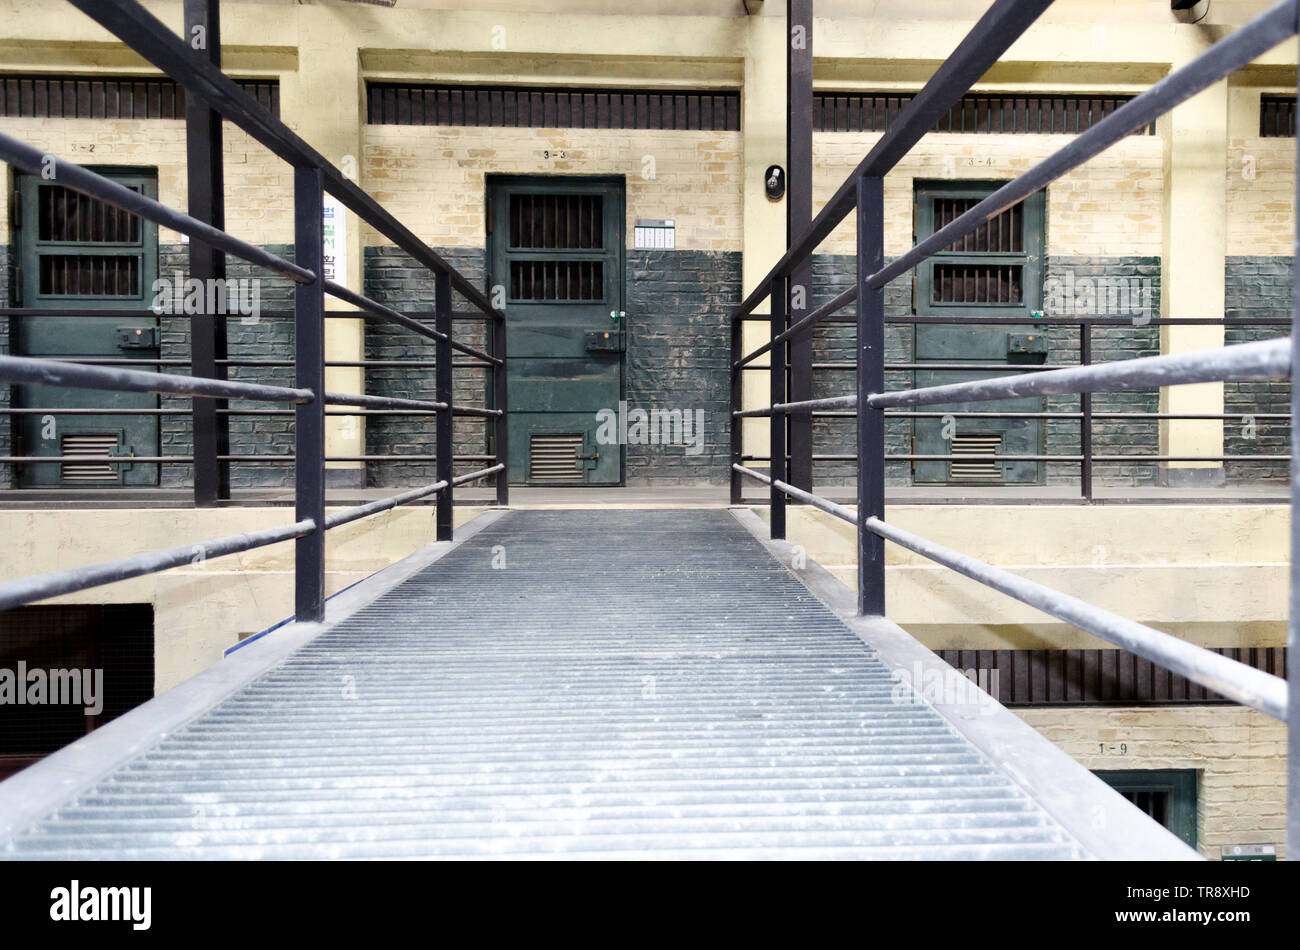 Prison interior. Jail cells and shadows, dark background. 3d illustration Stock Photo